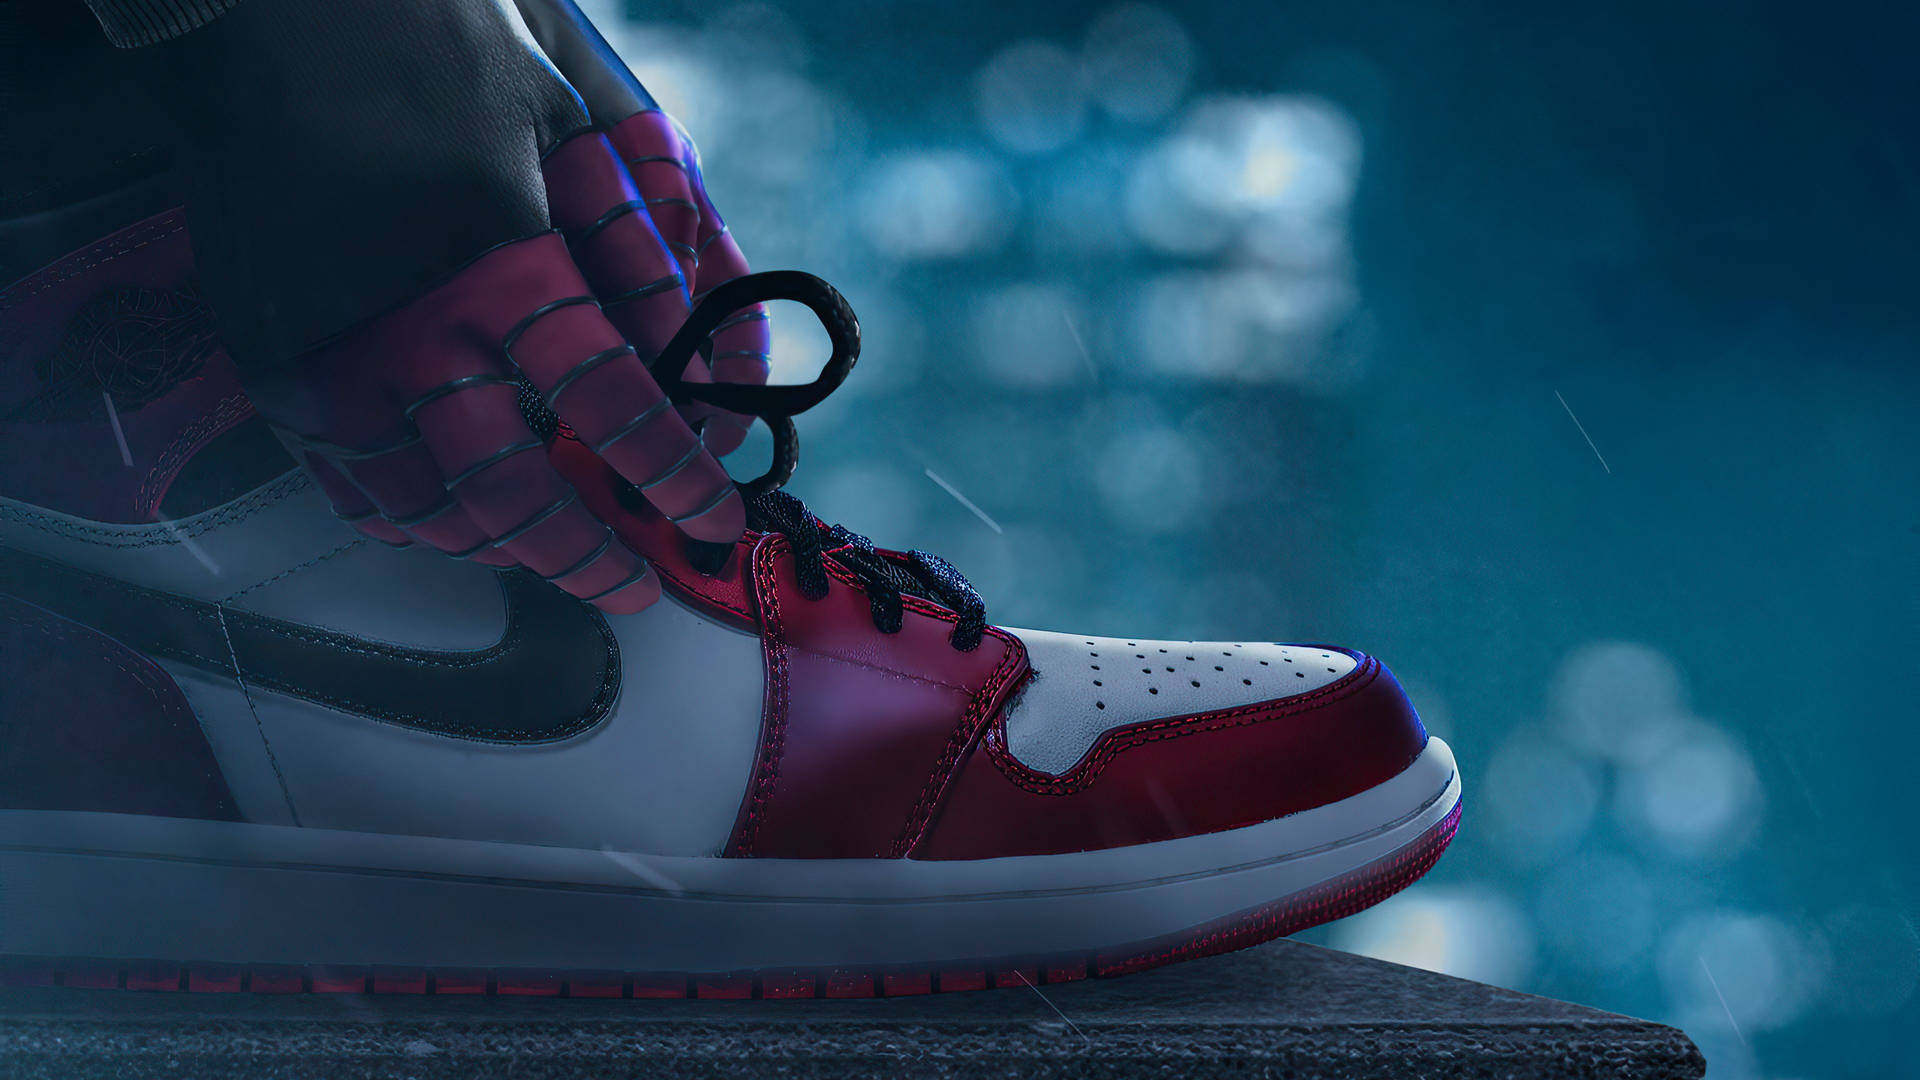 Spiderman Tying His Nike Air Jordan 1